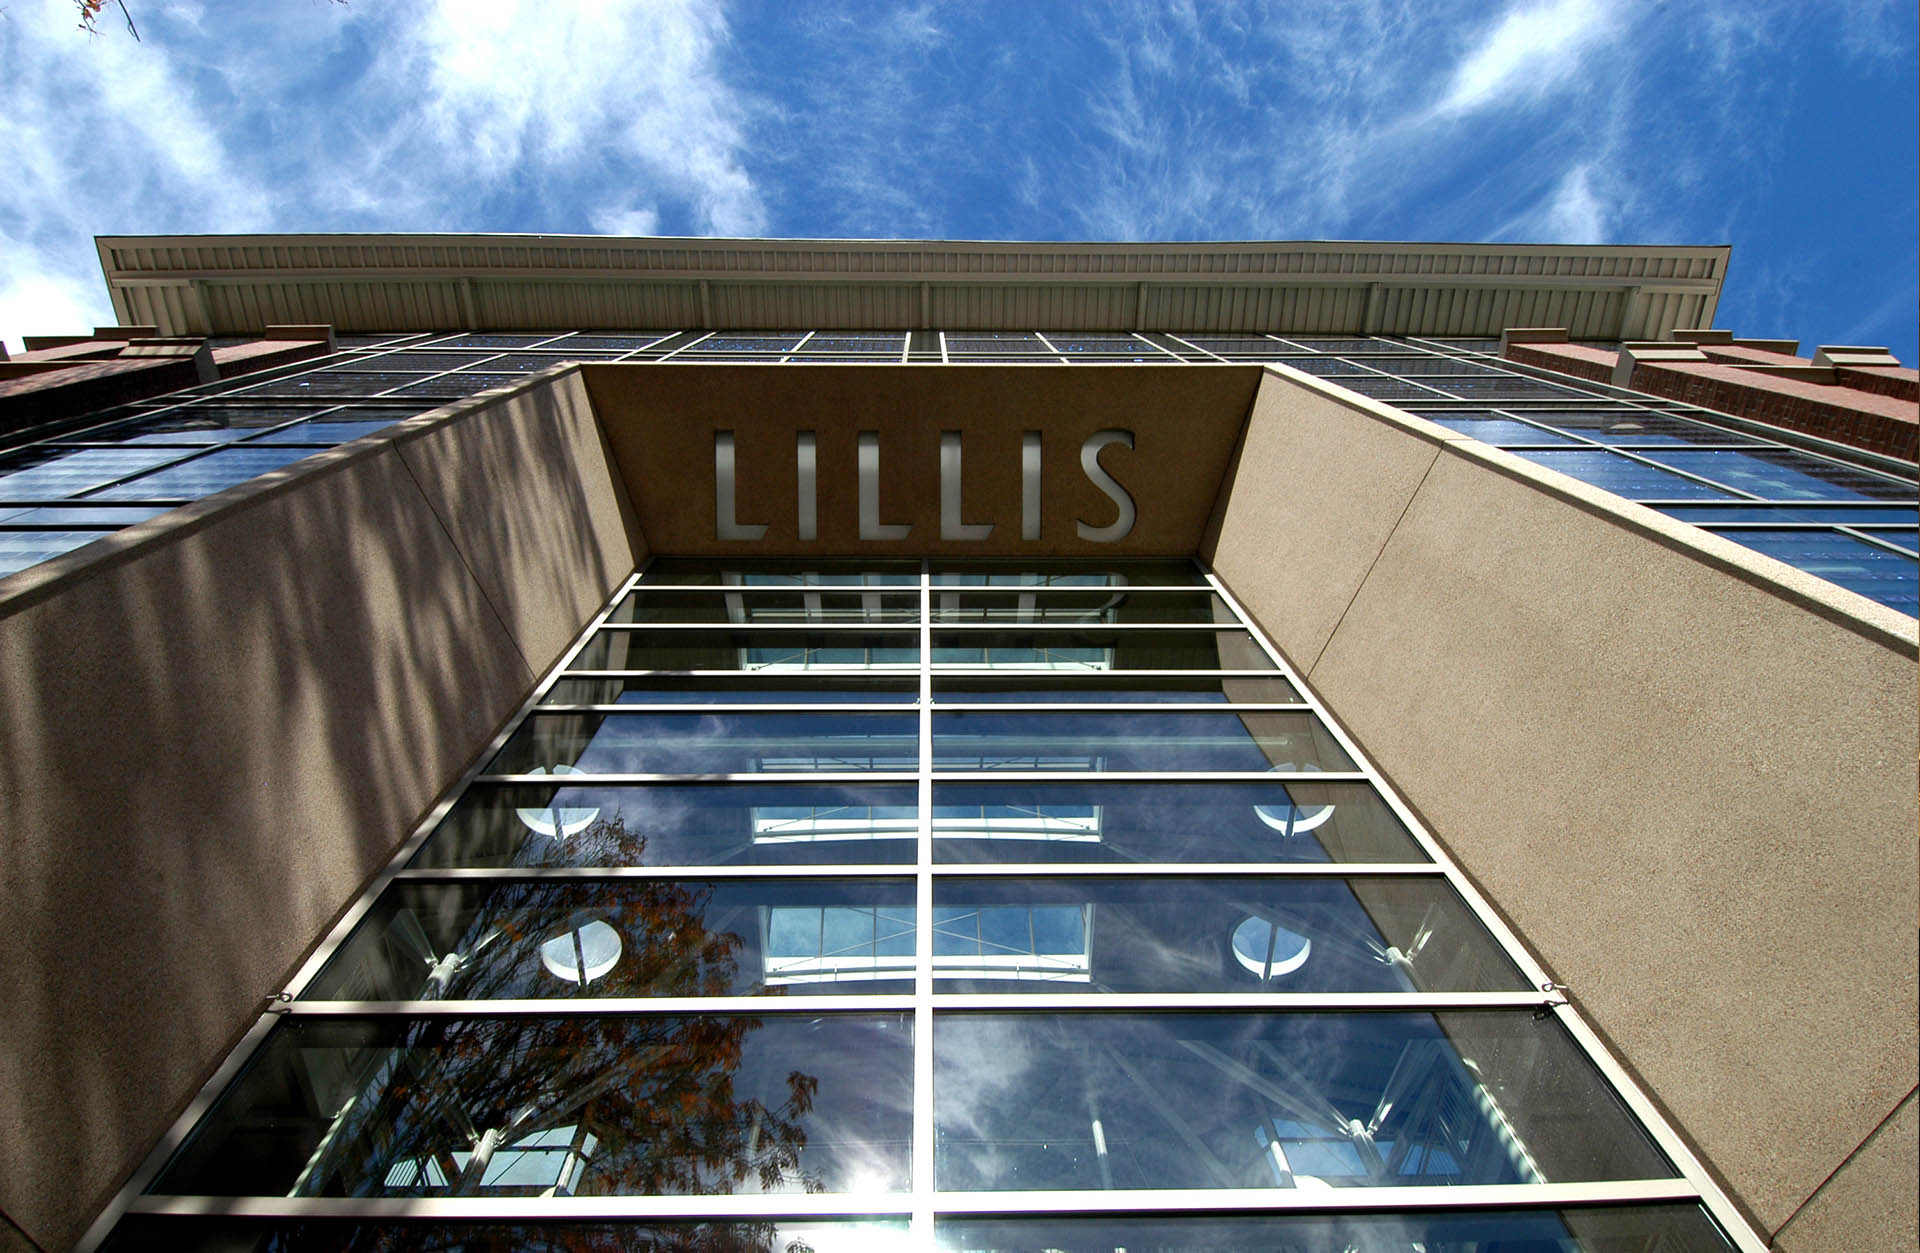 Lillis Business complex University of Oregon main entrance with building name